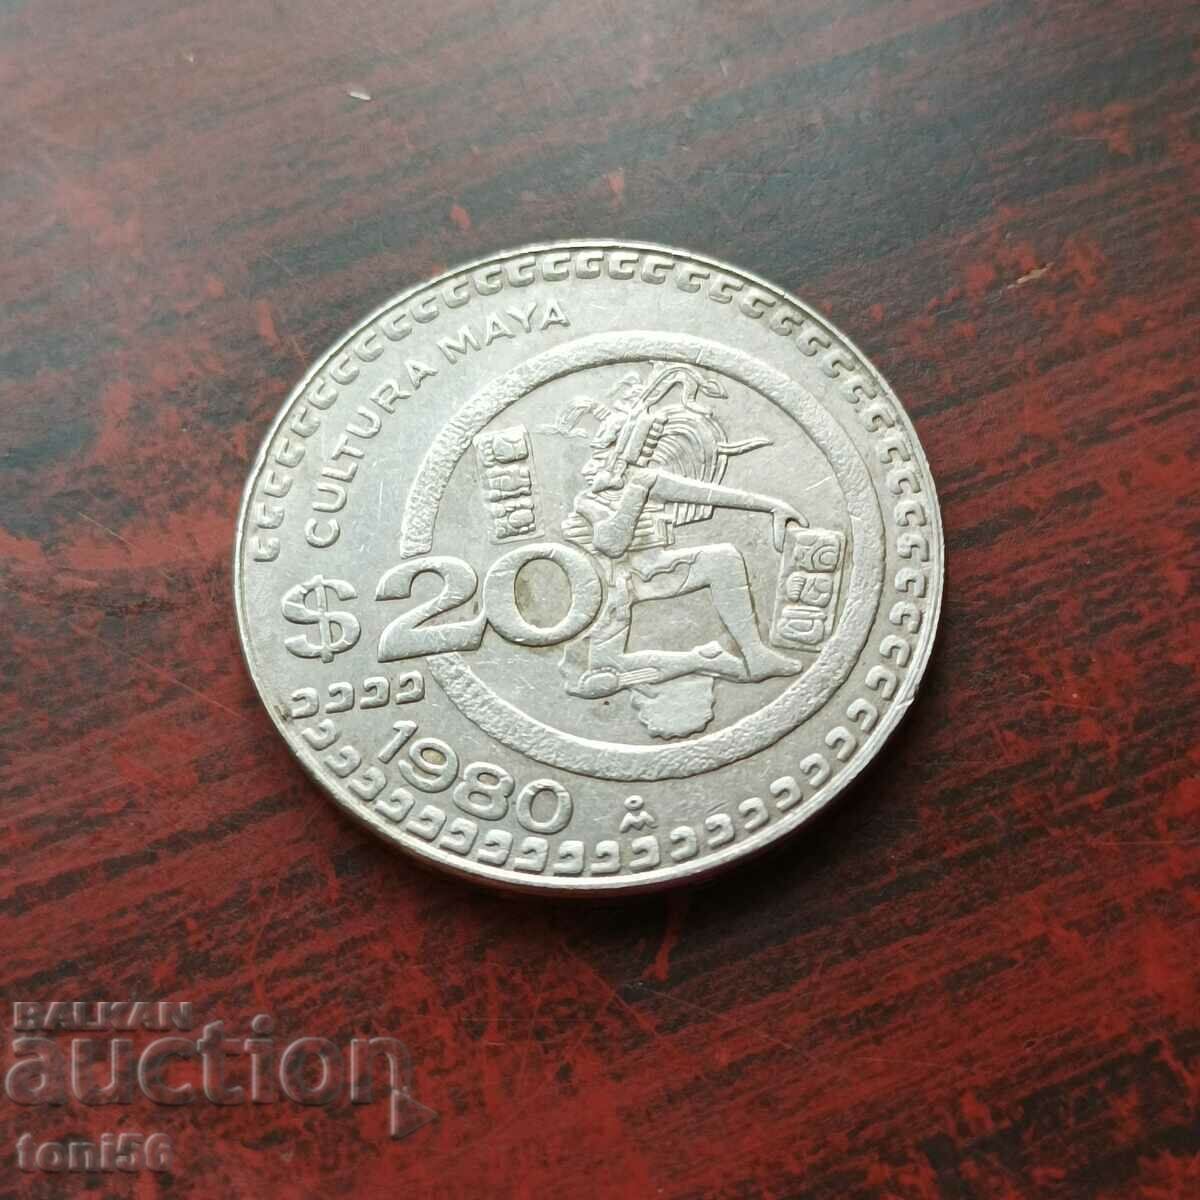 Mexico 20 pesos 1980